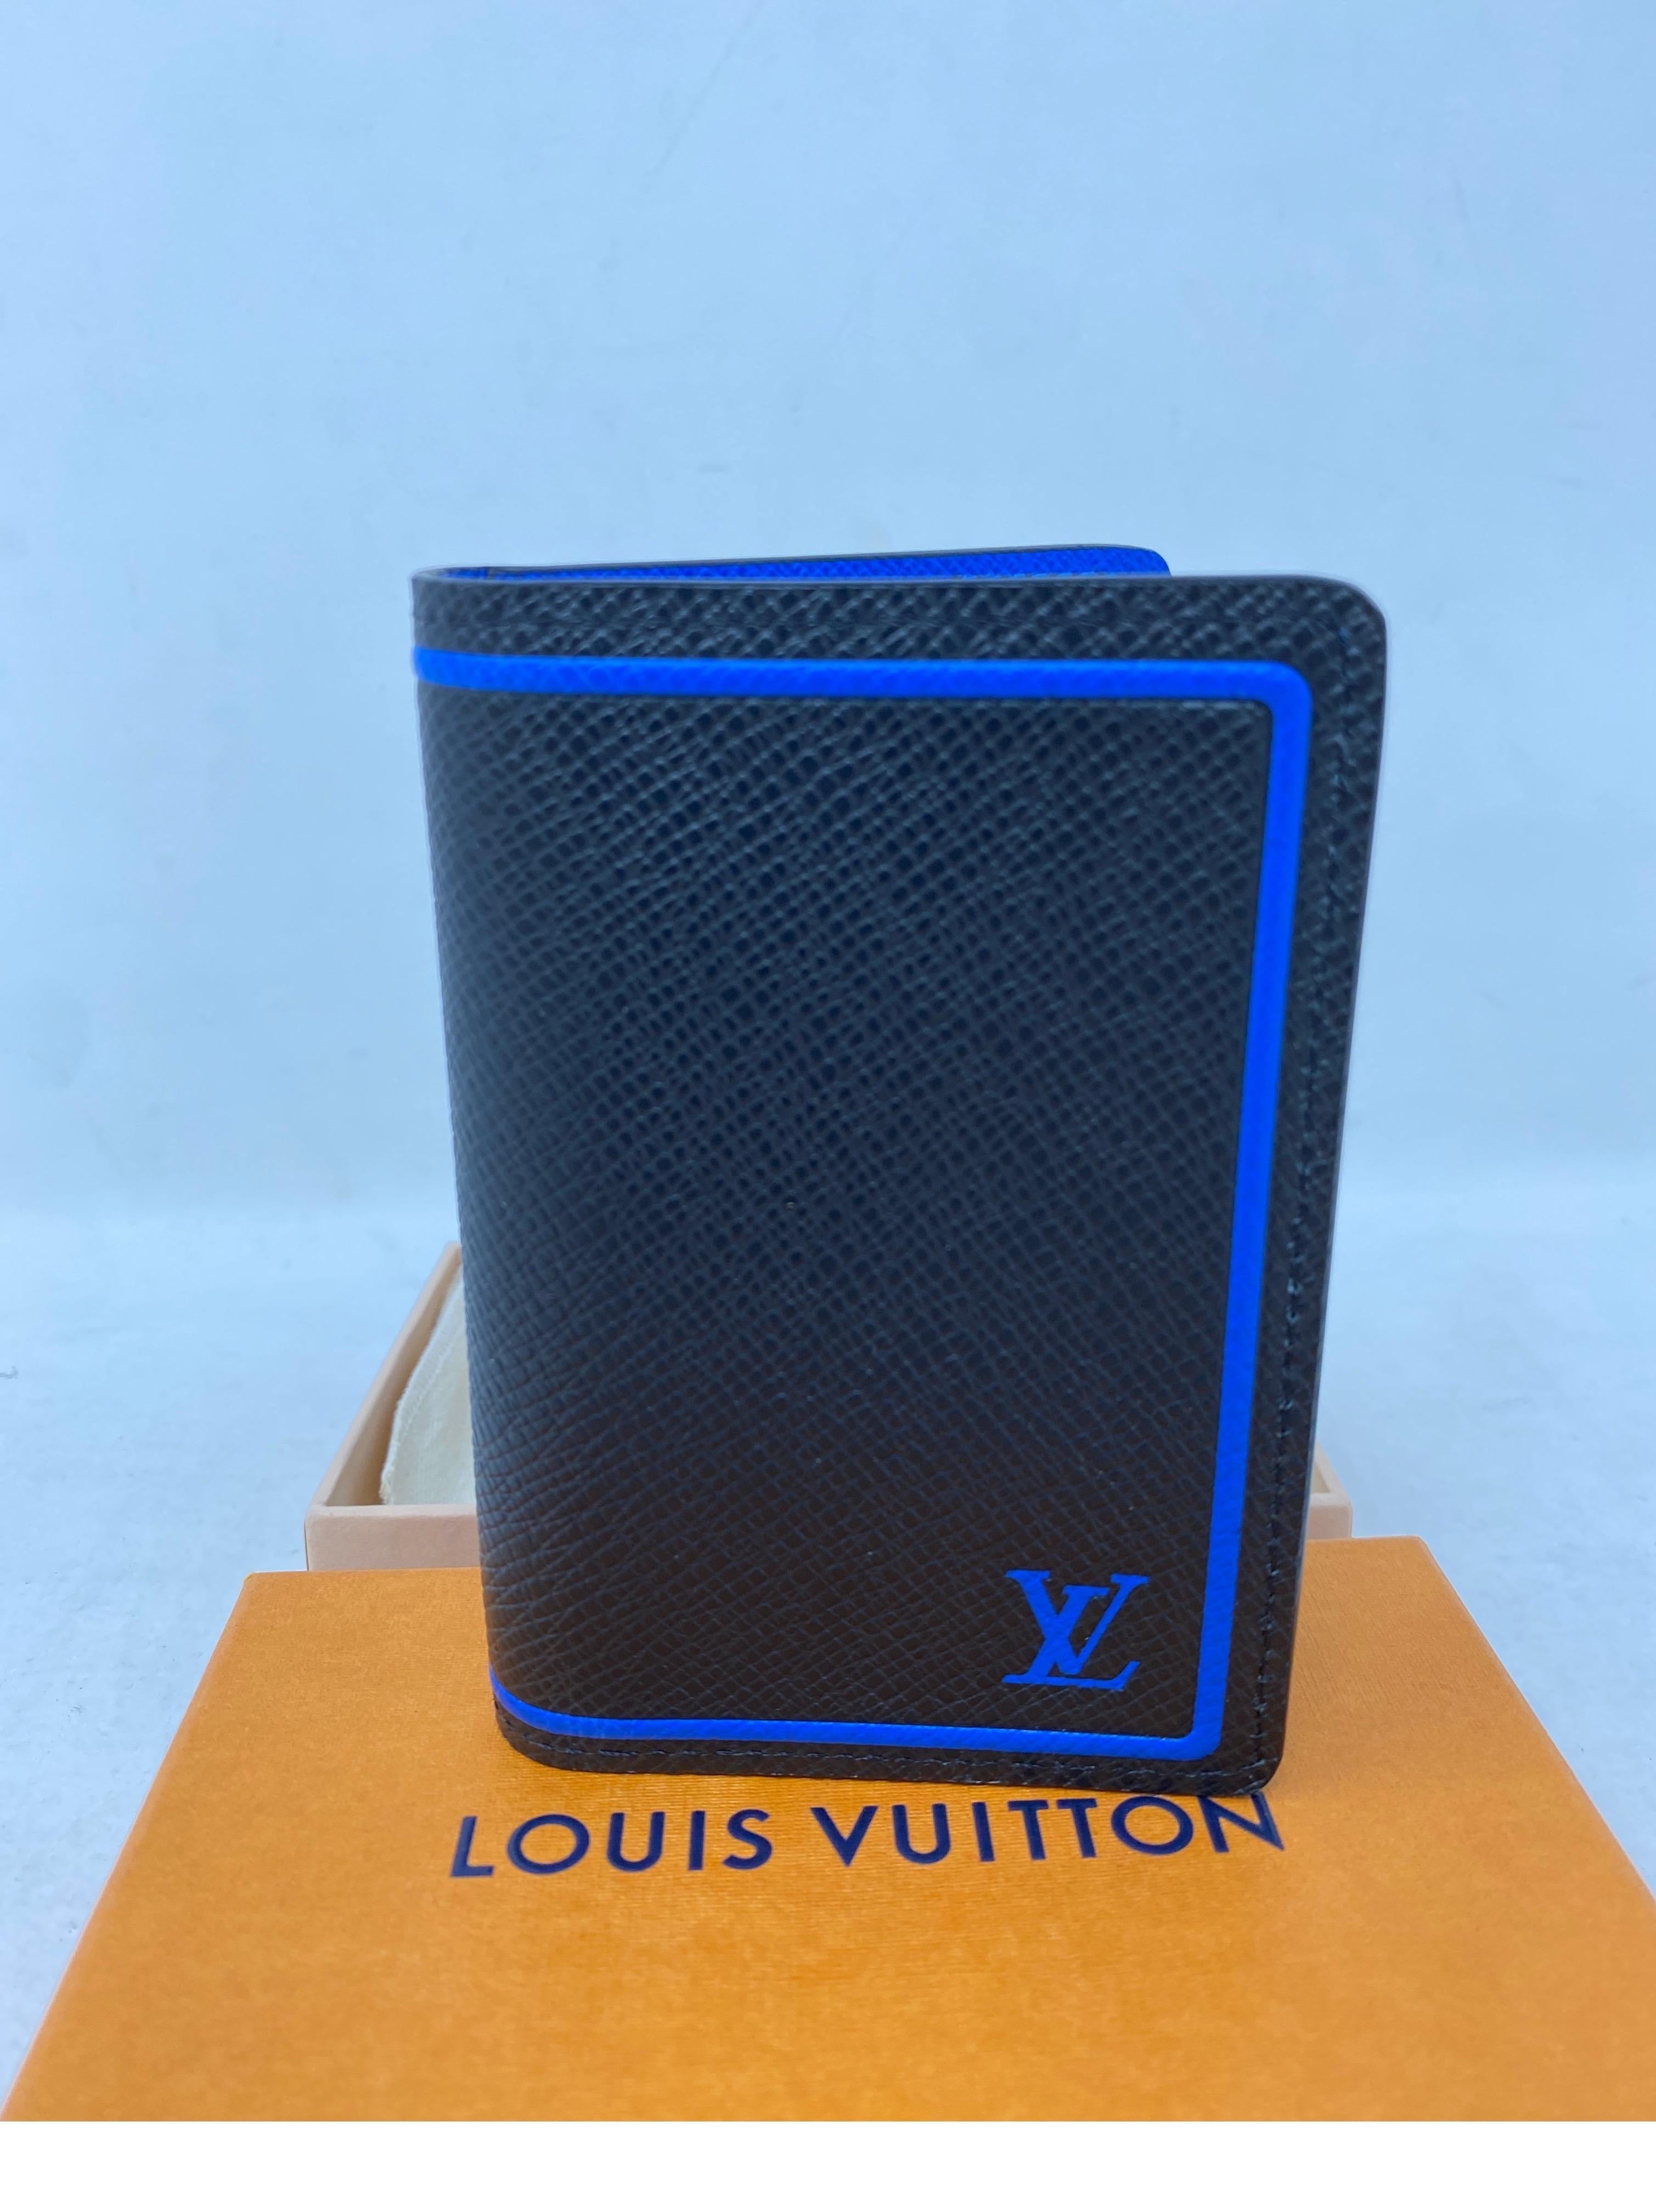 Louis Vuitton Limited Edition Black Blue Wallet  6